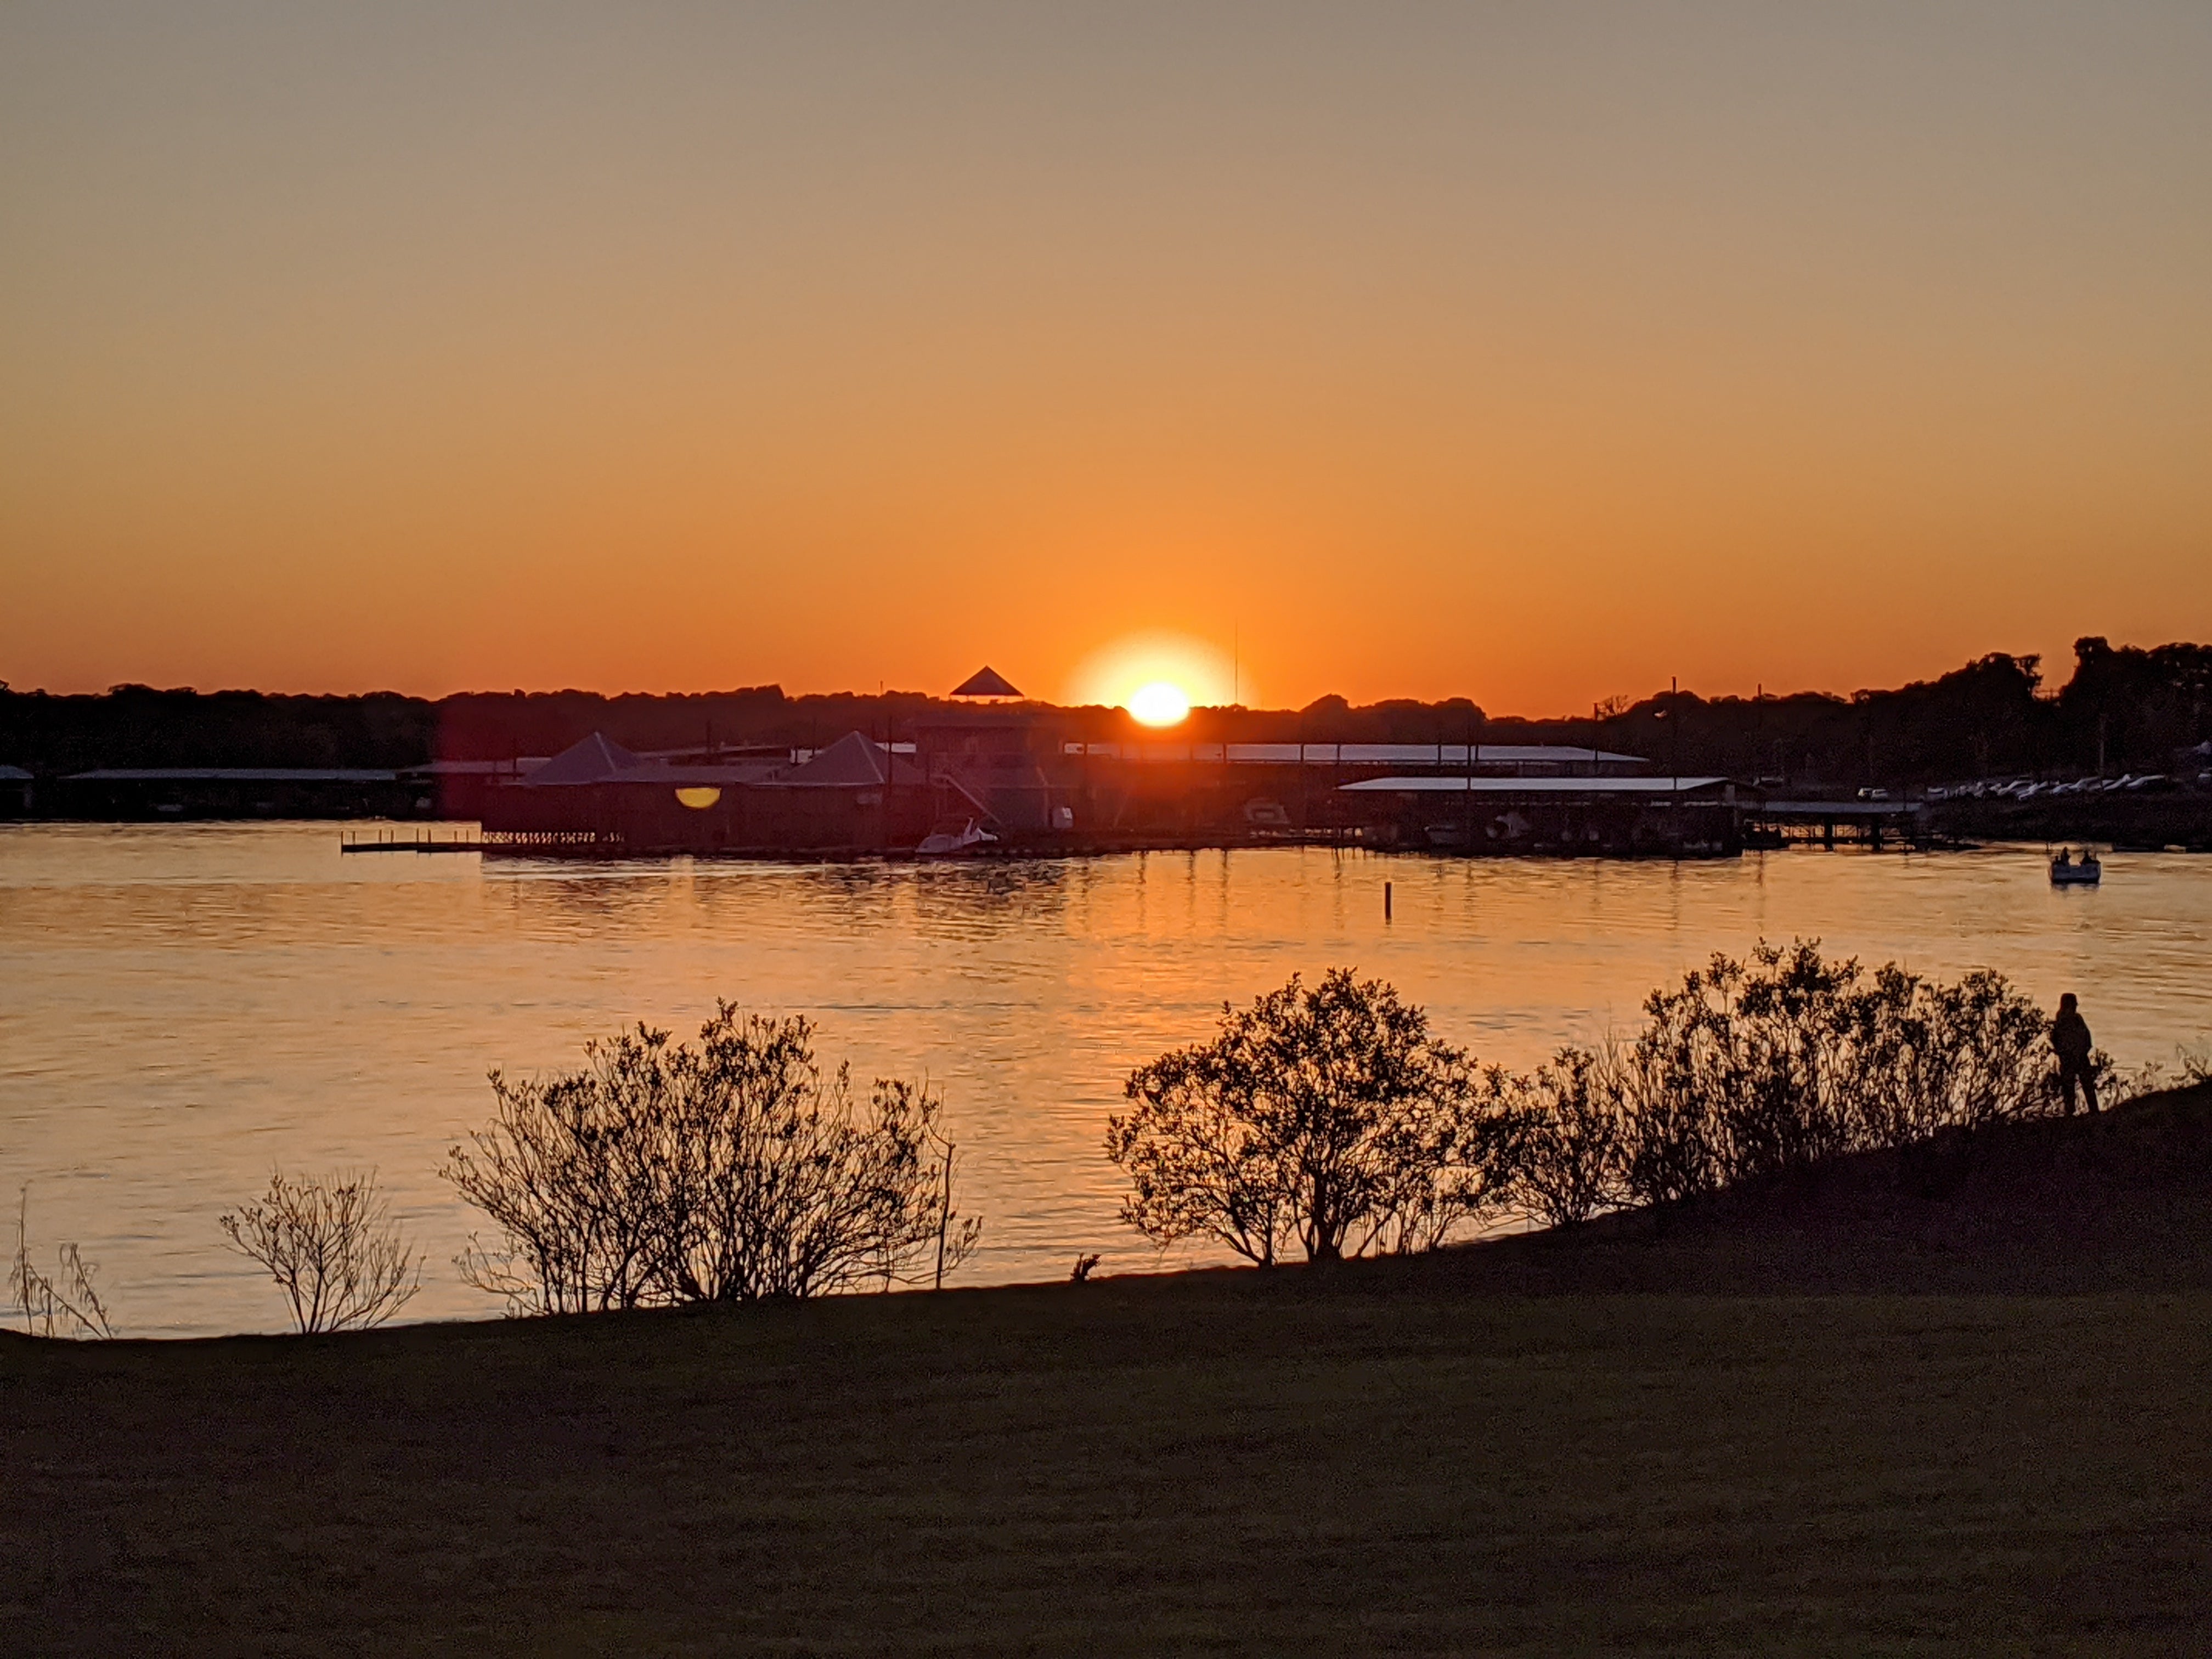 Sunset over the Catfish Bay Marina